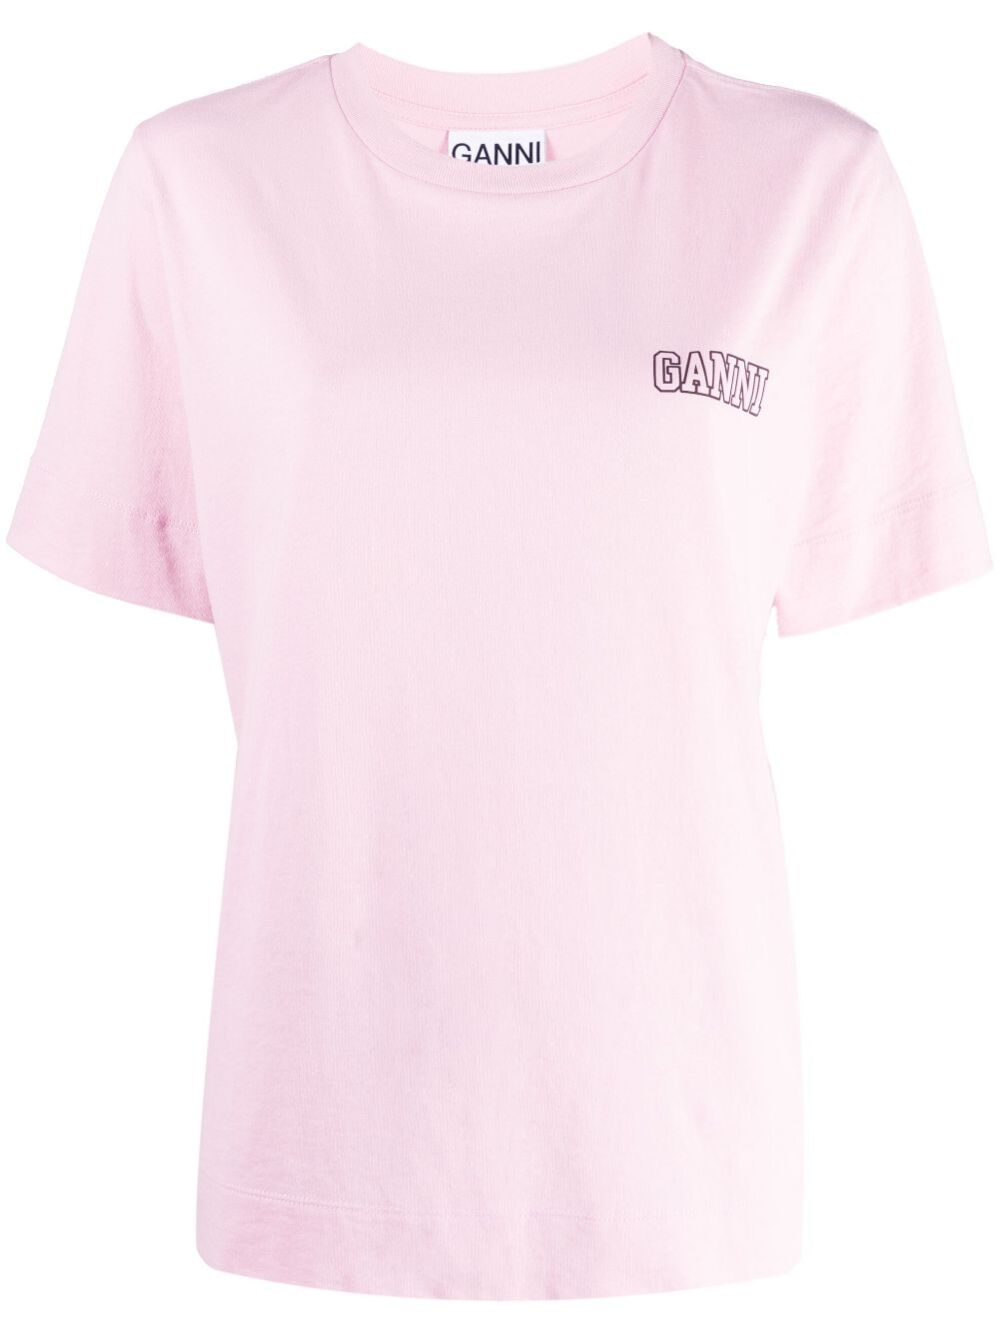 22SS 가니 GANNI 로고 반팔티 티셔츠 여성 핑크 T2917465